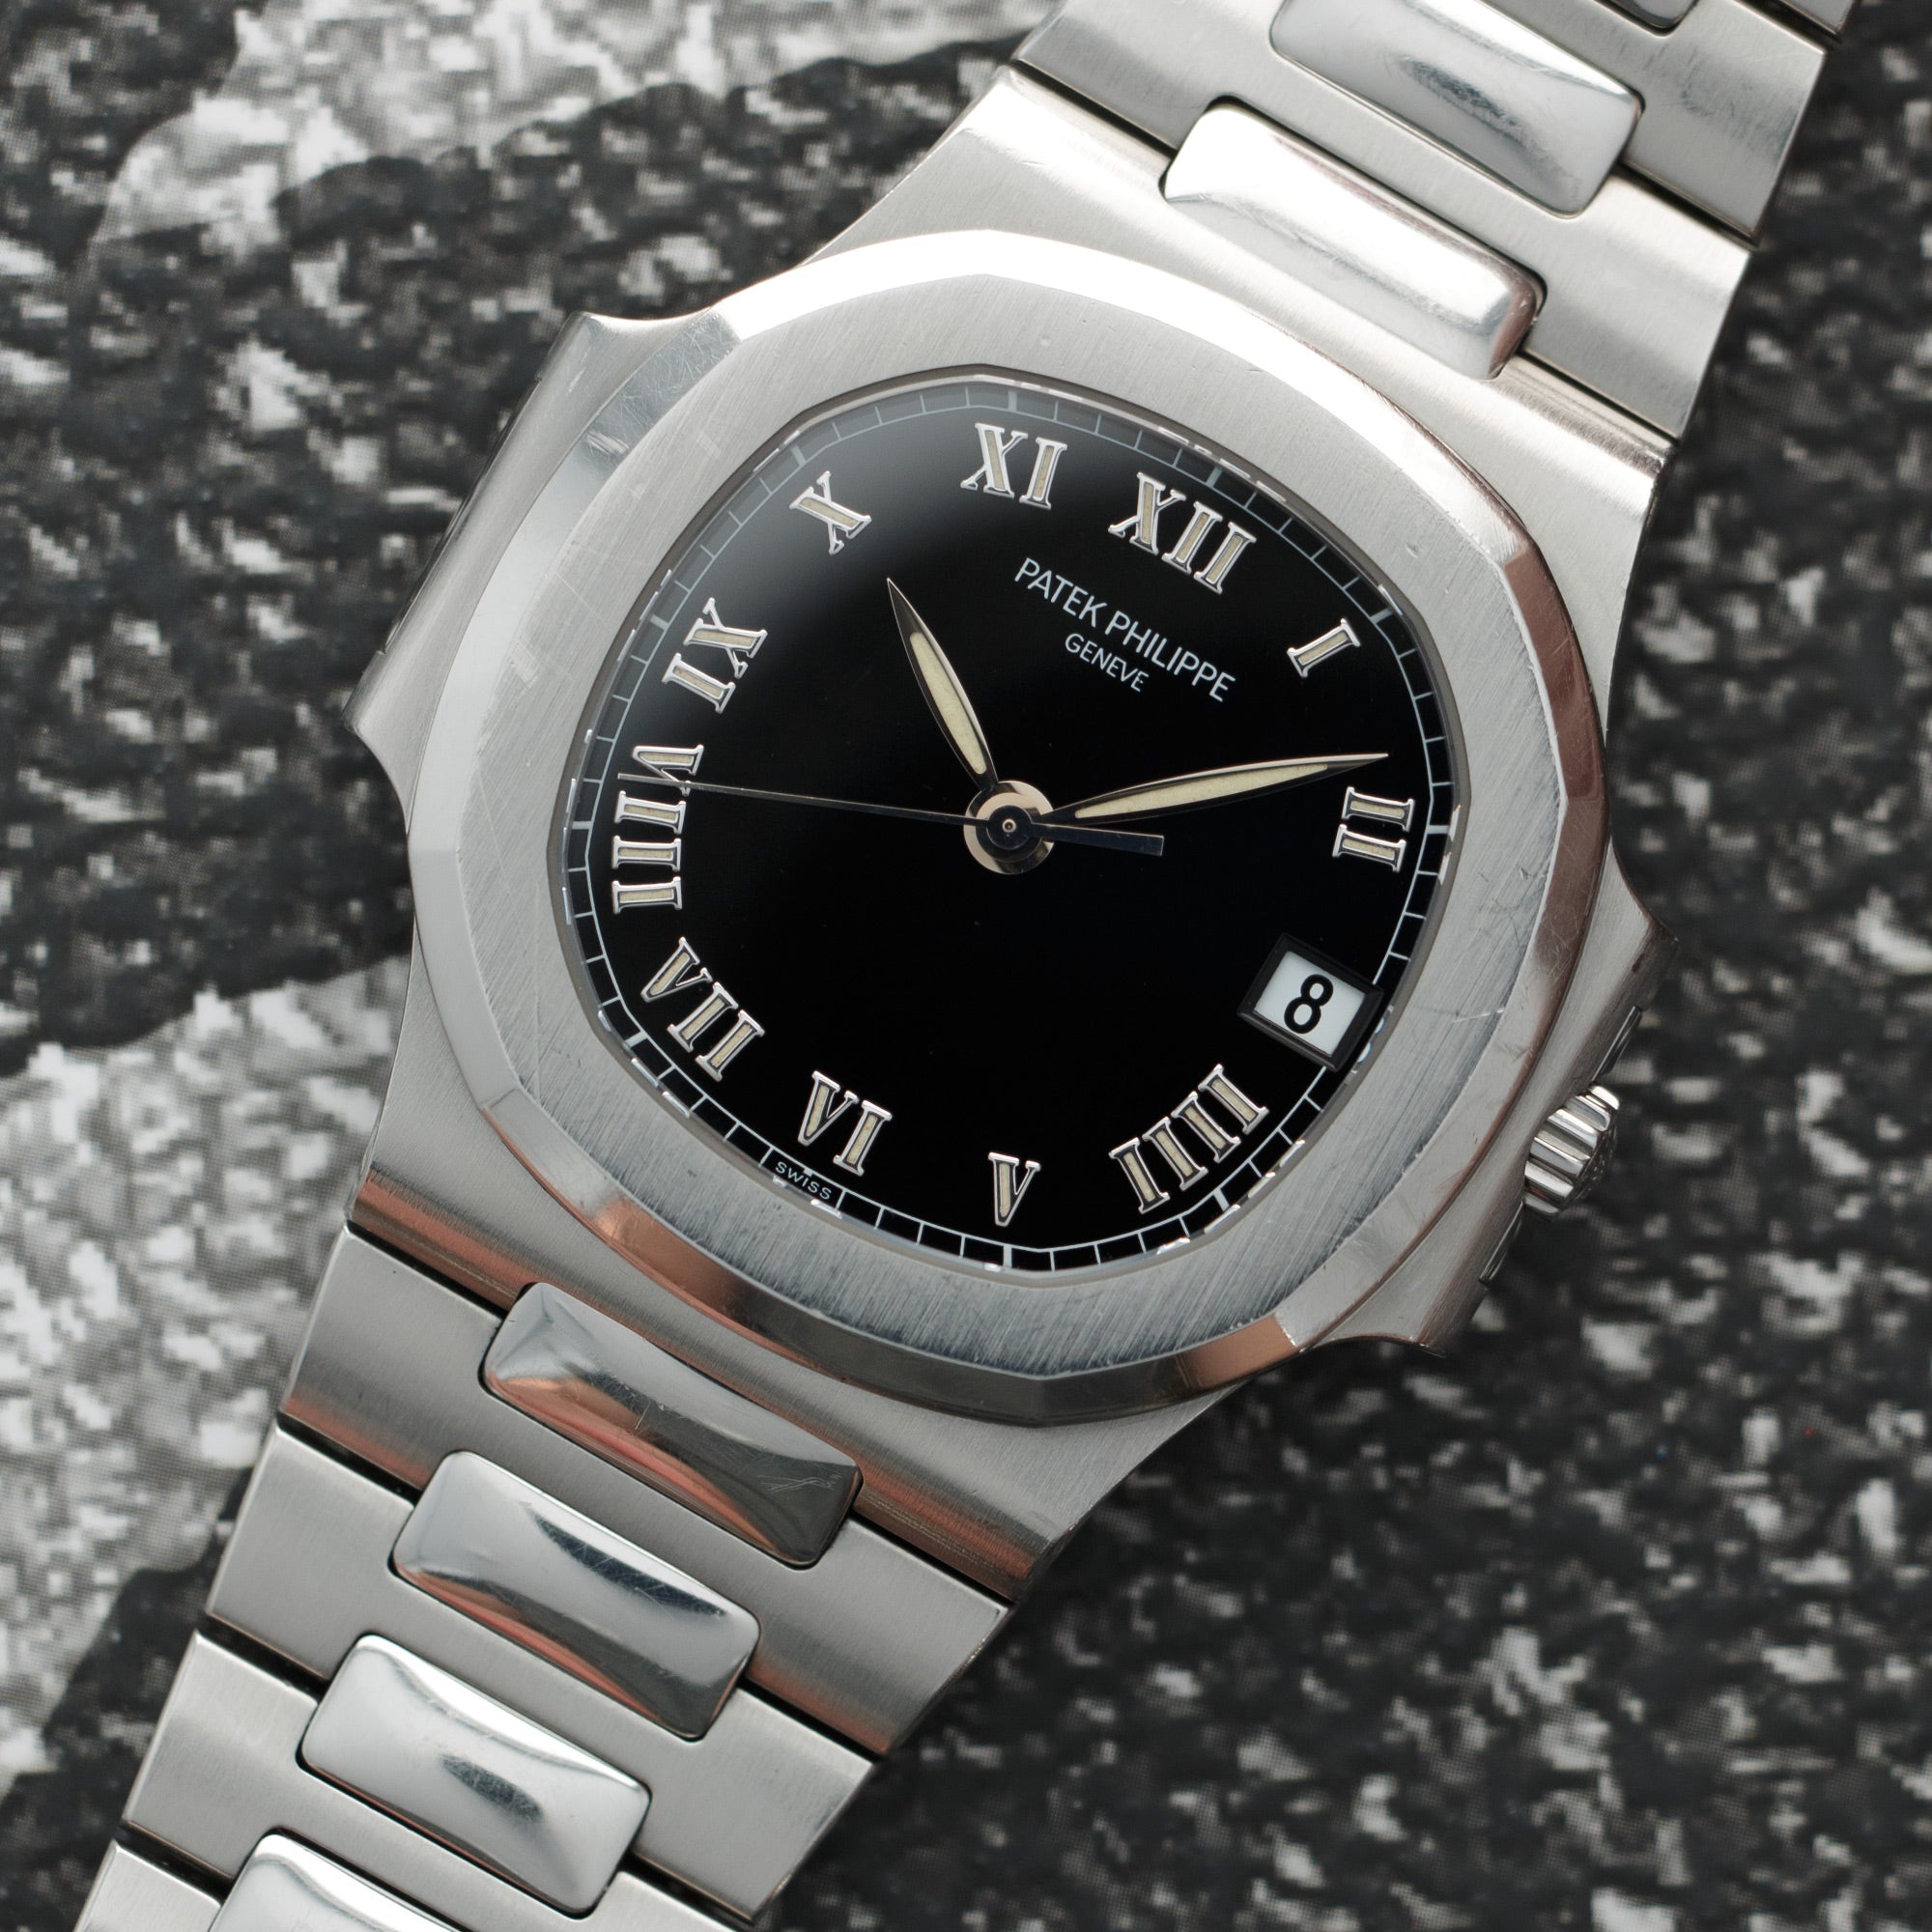 Patek Philippe - Patek Philippe Nautilus Ref. 3800 with Black Roman Numeral Dial - The Keystone Watches